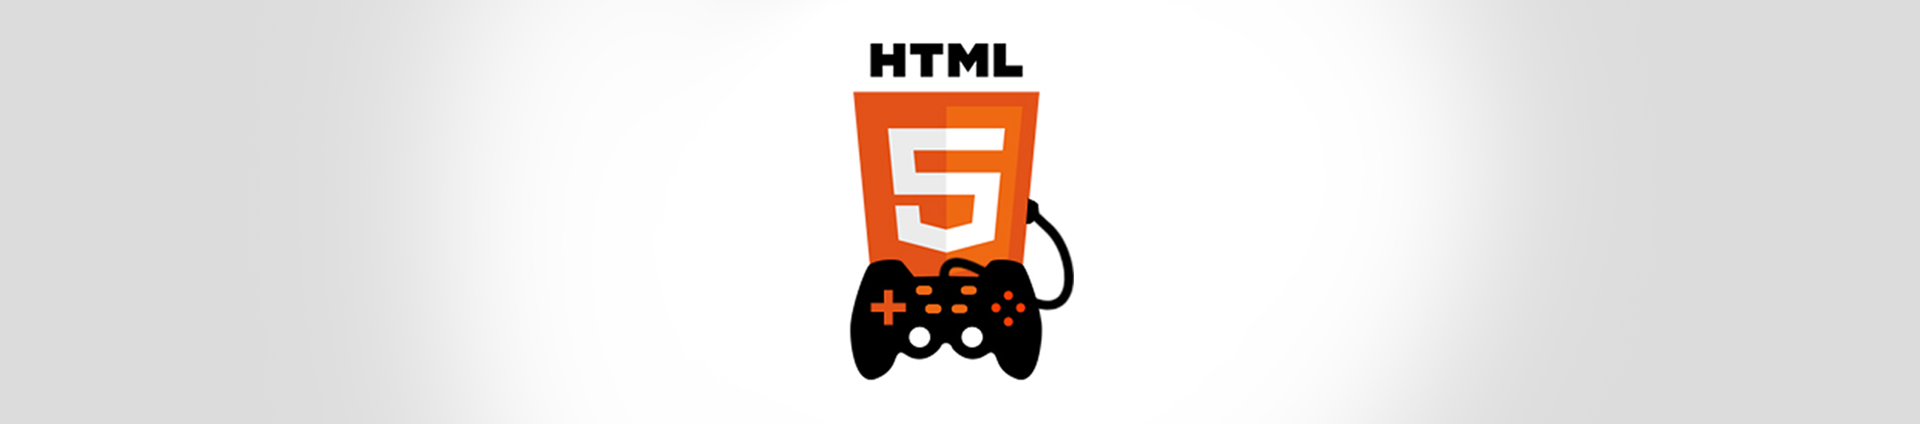 HTML5 game license